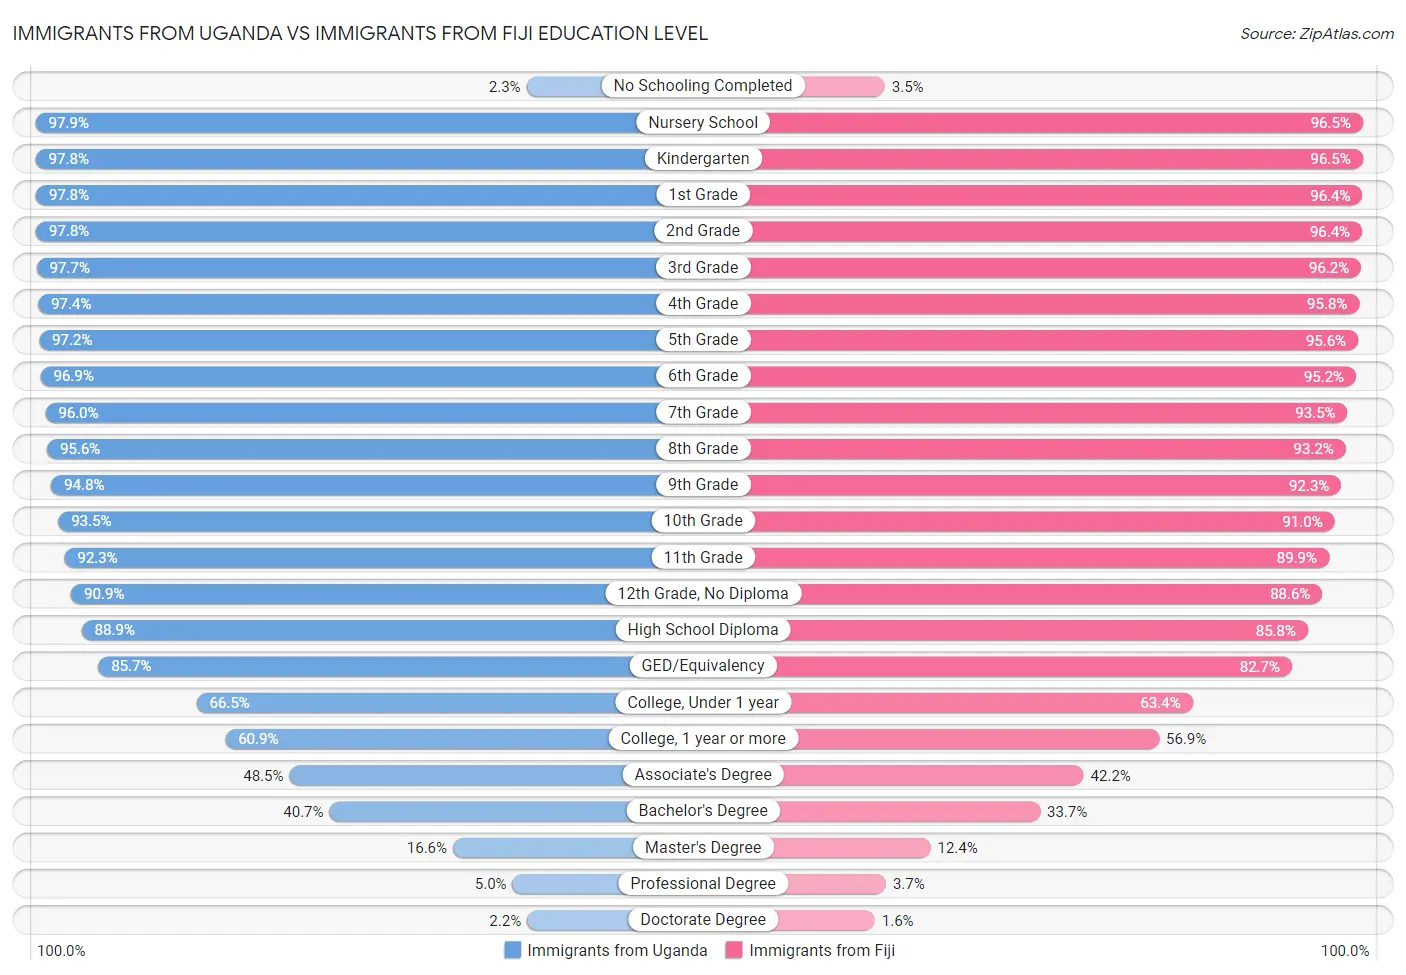 Immigrants from Uganda vs Immigrants from Fiji Education Level